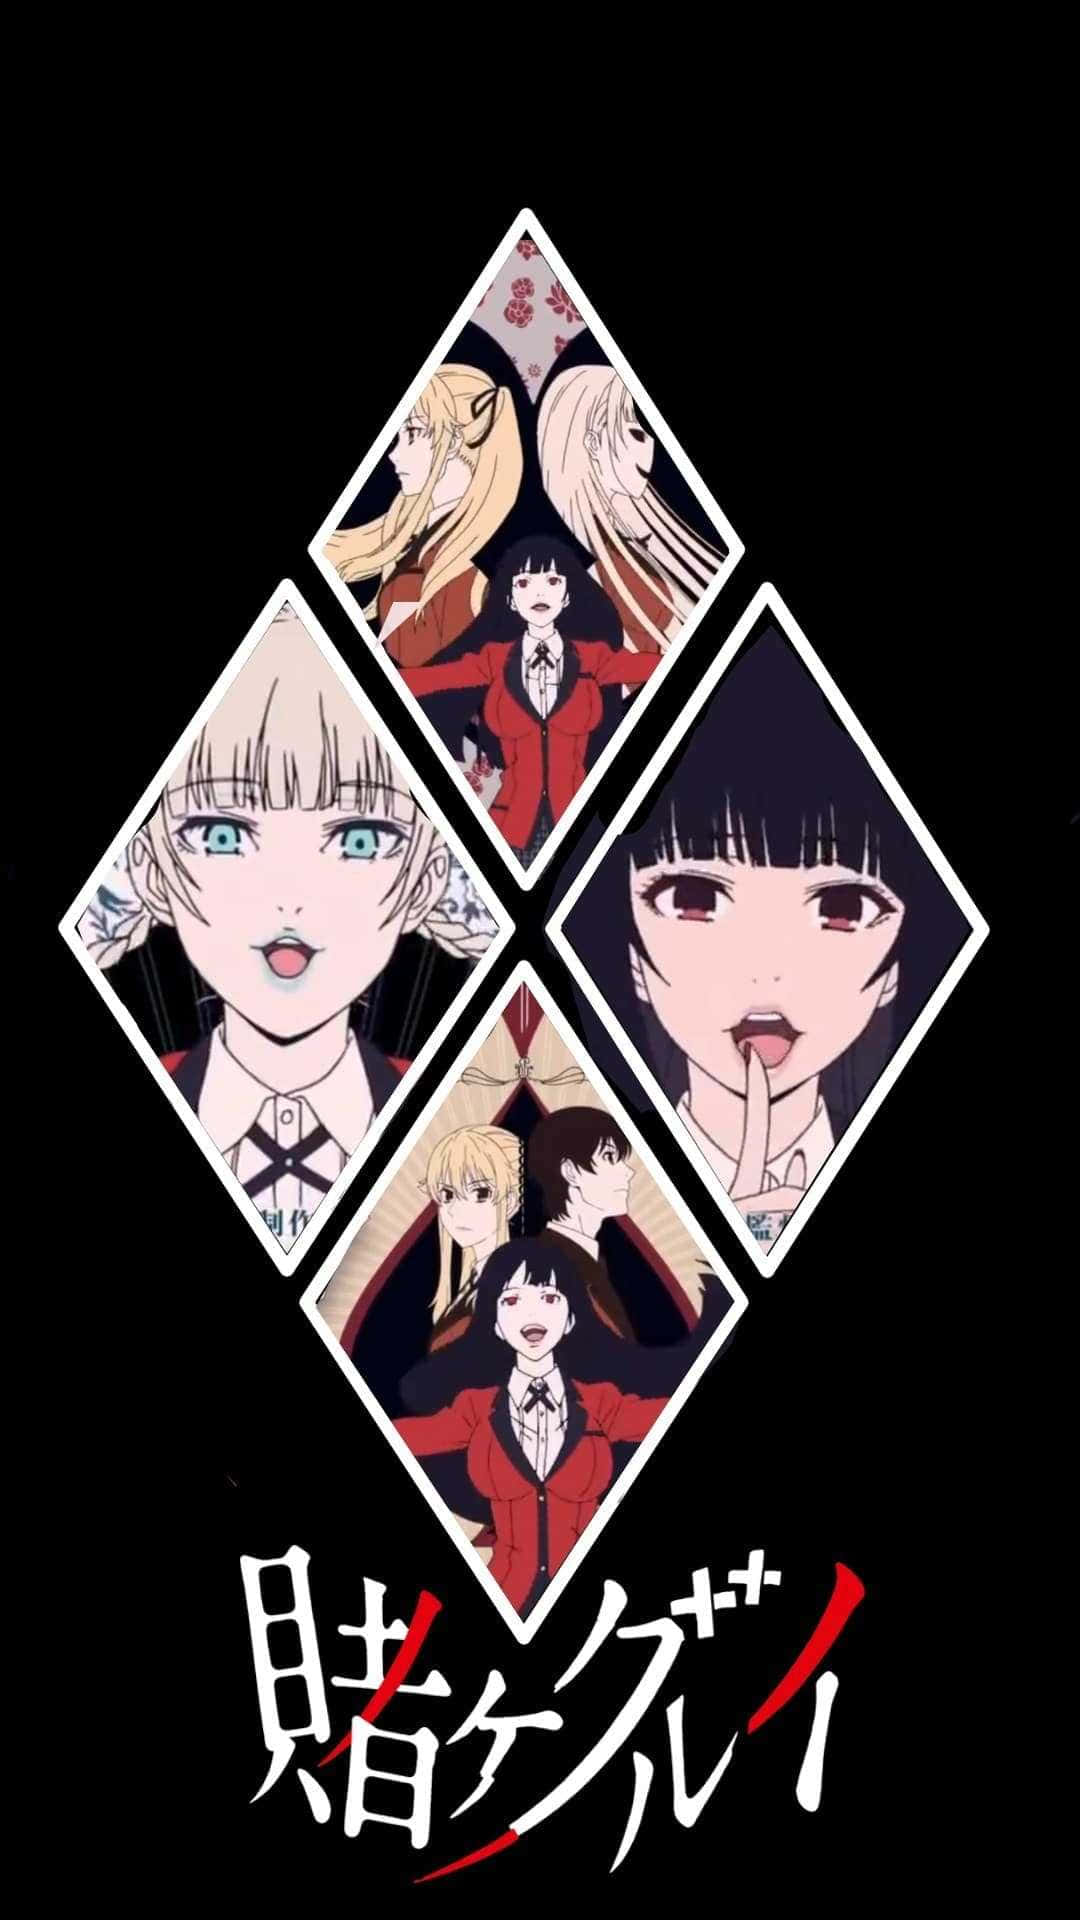 Kakegurui  Cute anime wallpaper Anime wallpaper iphone Anime wallpaper